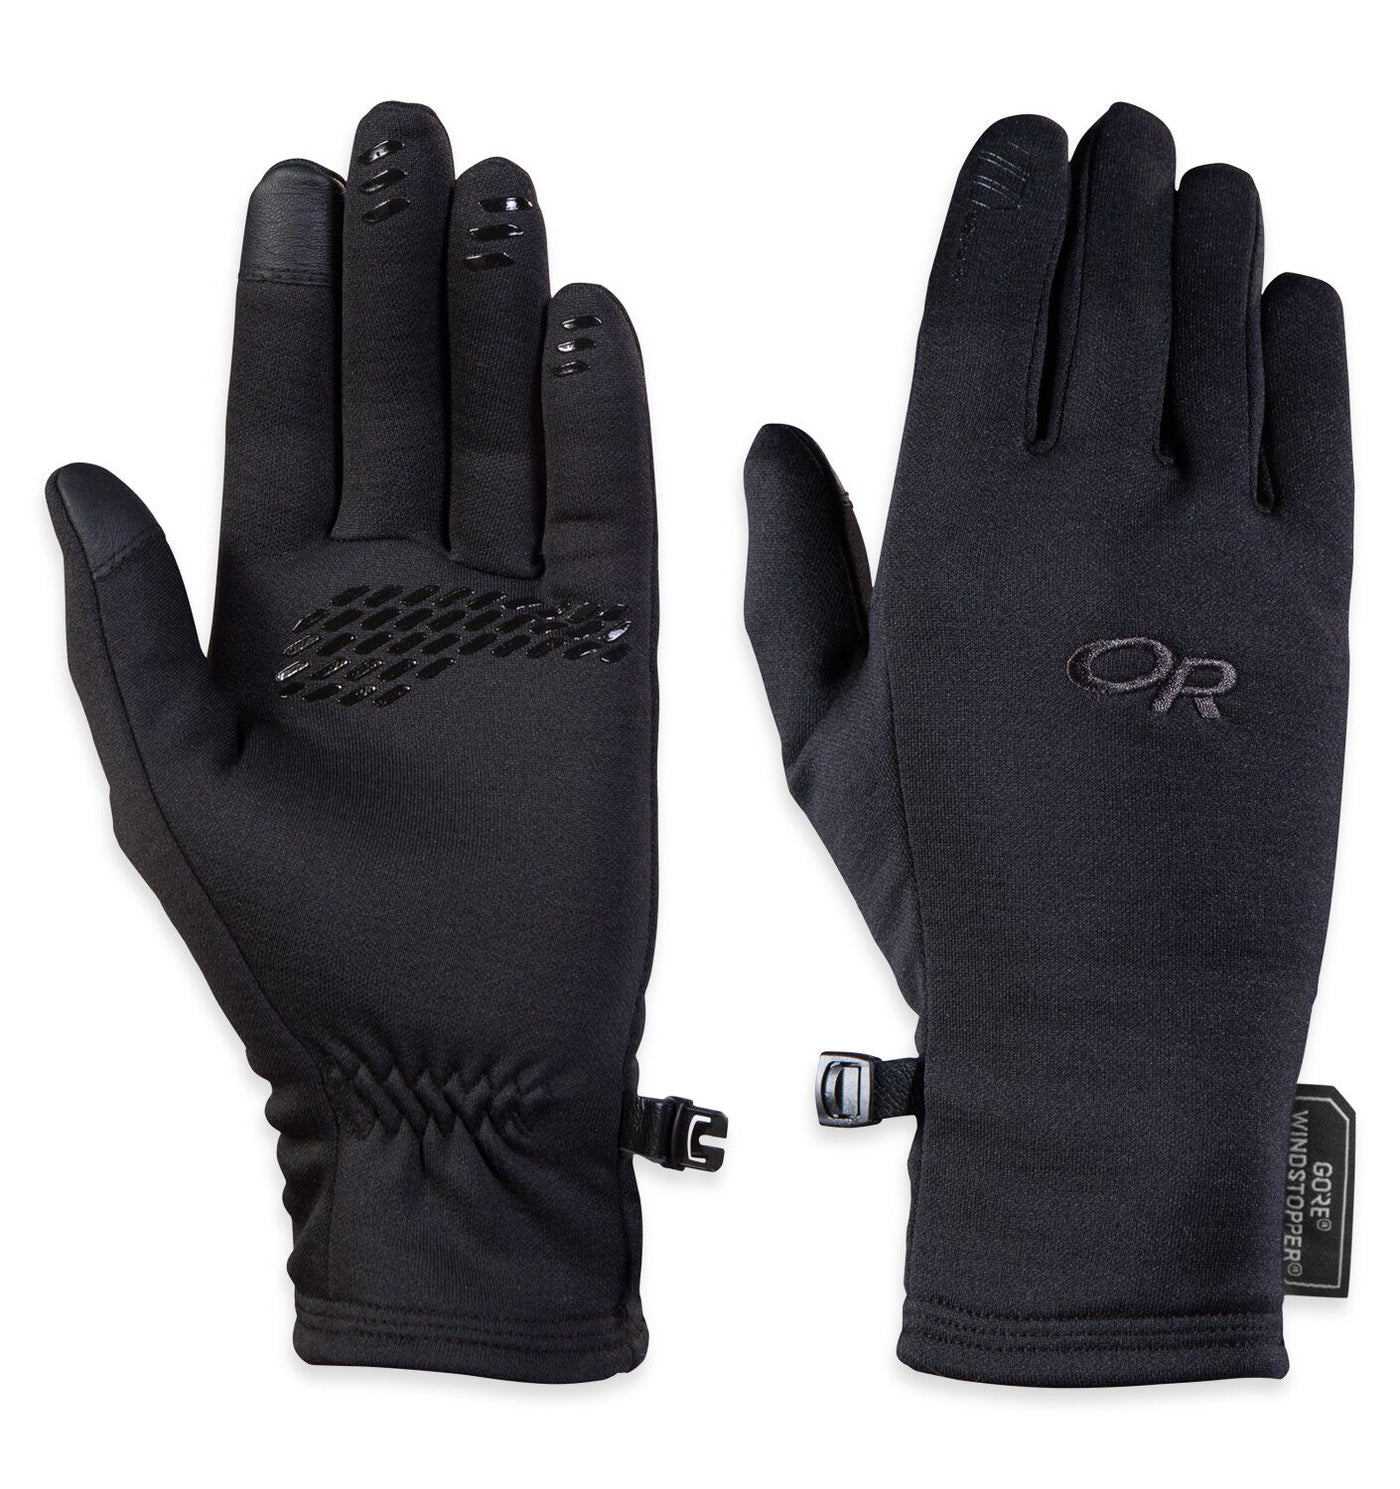 Backstop Sensor Gloves Women's